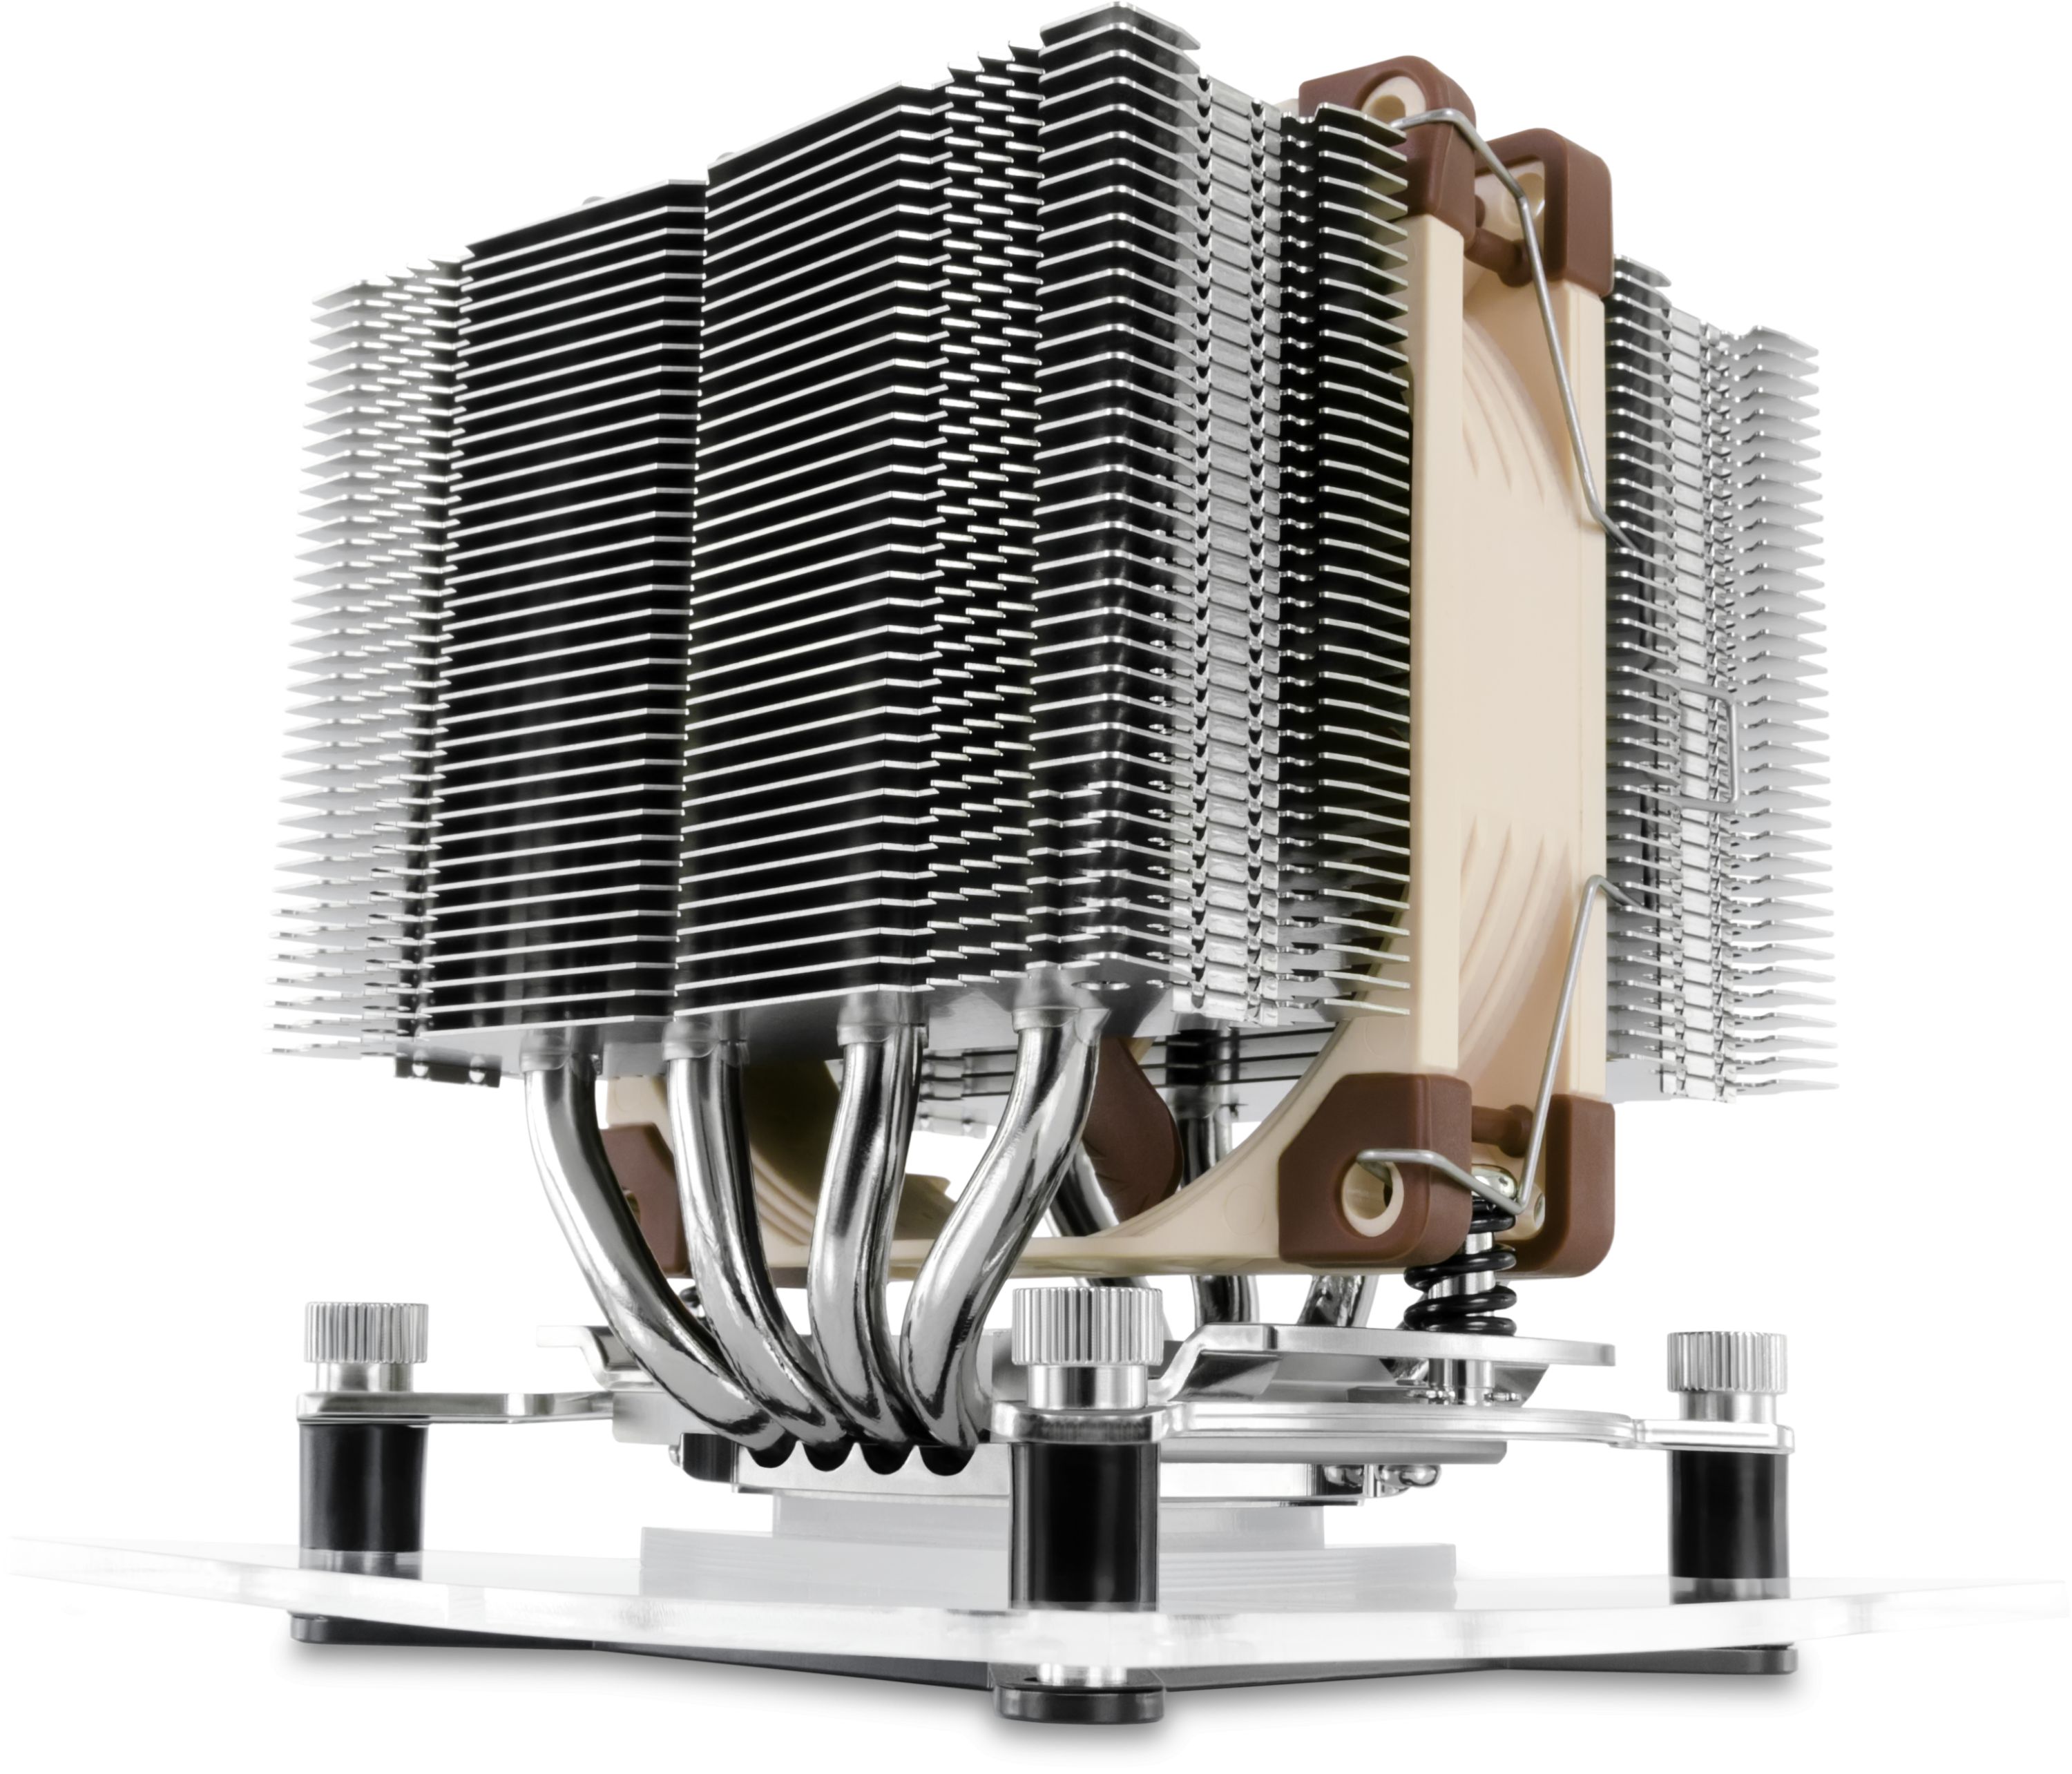 NH-D9L Dual Heatsink CPU Cooler with NF-A9 fan